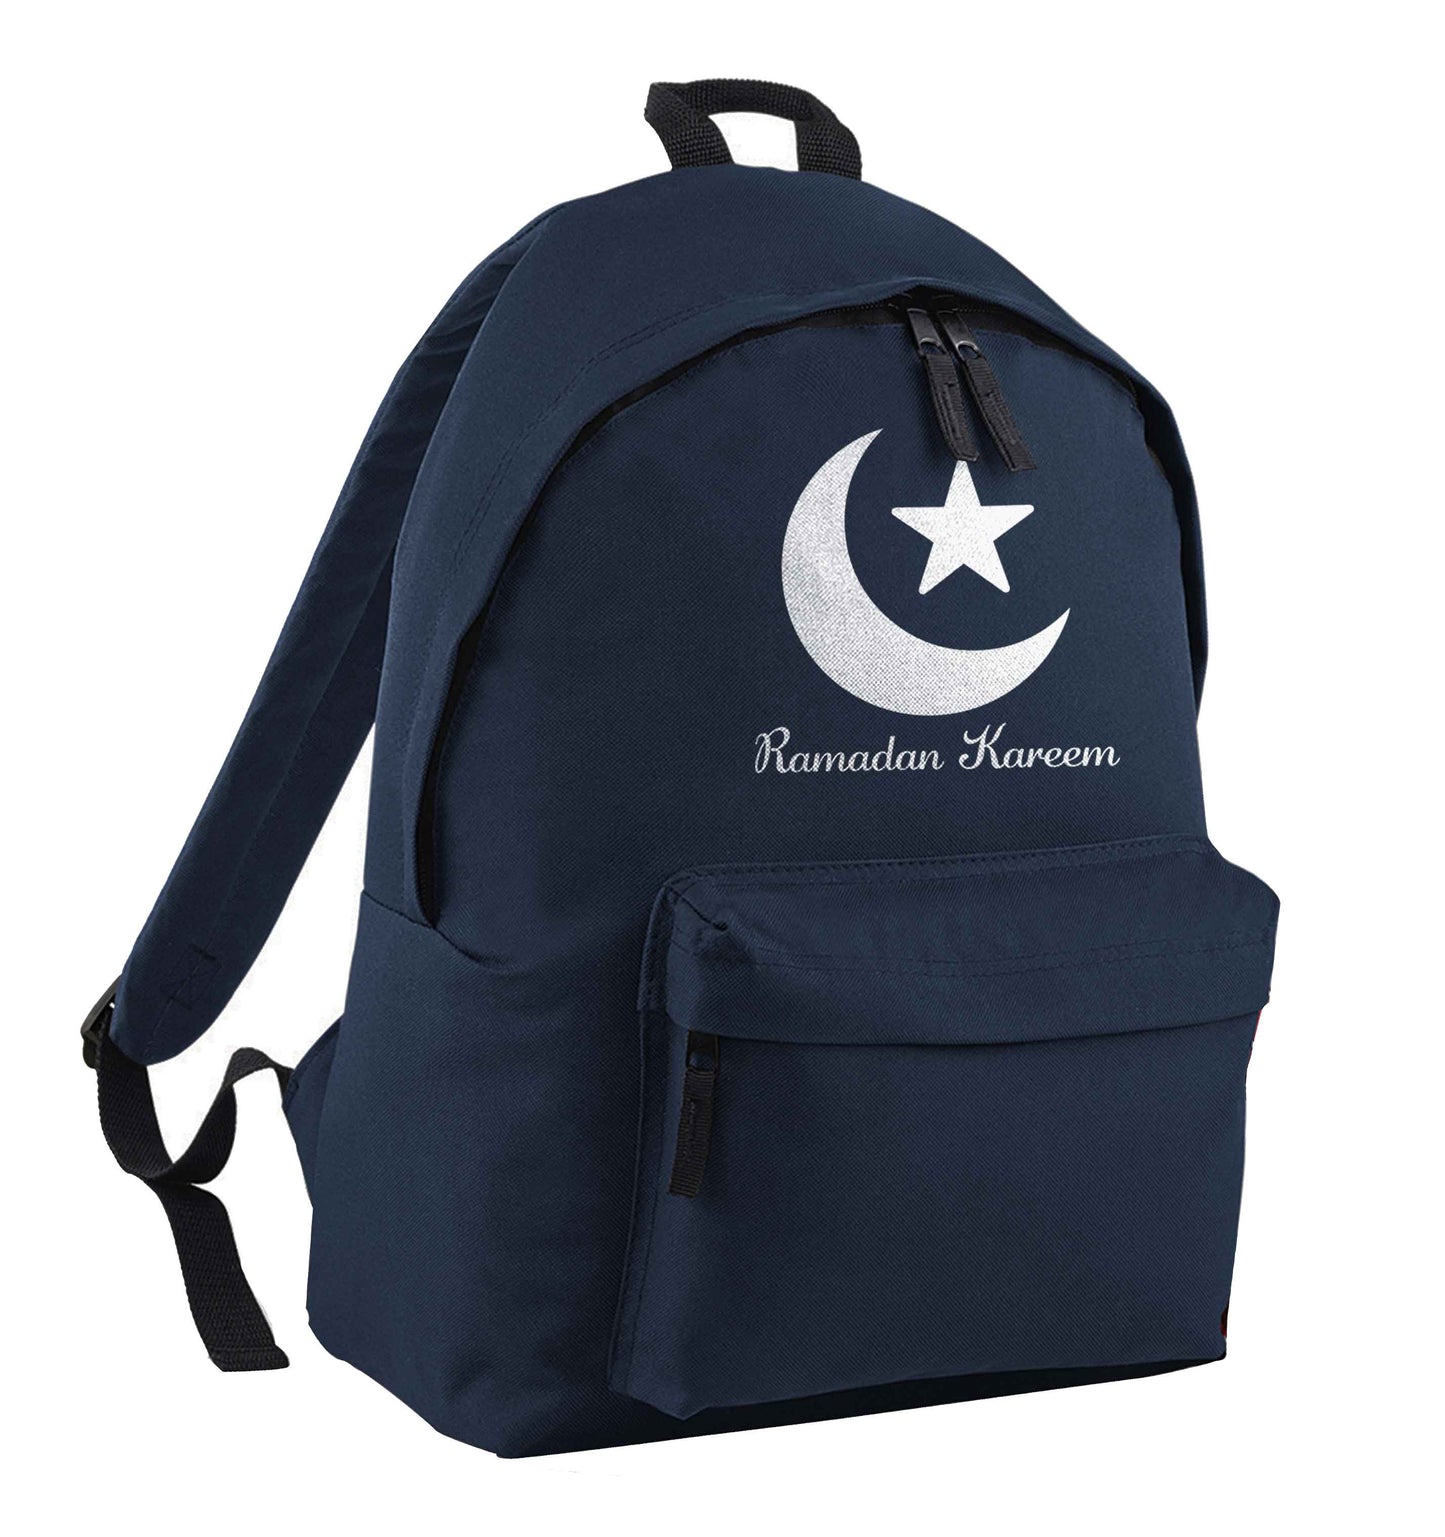 Ramadan kareem navy adults backpack